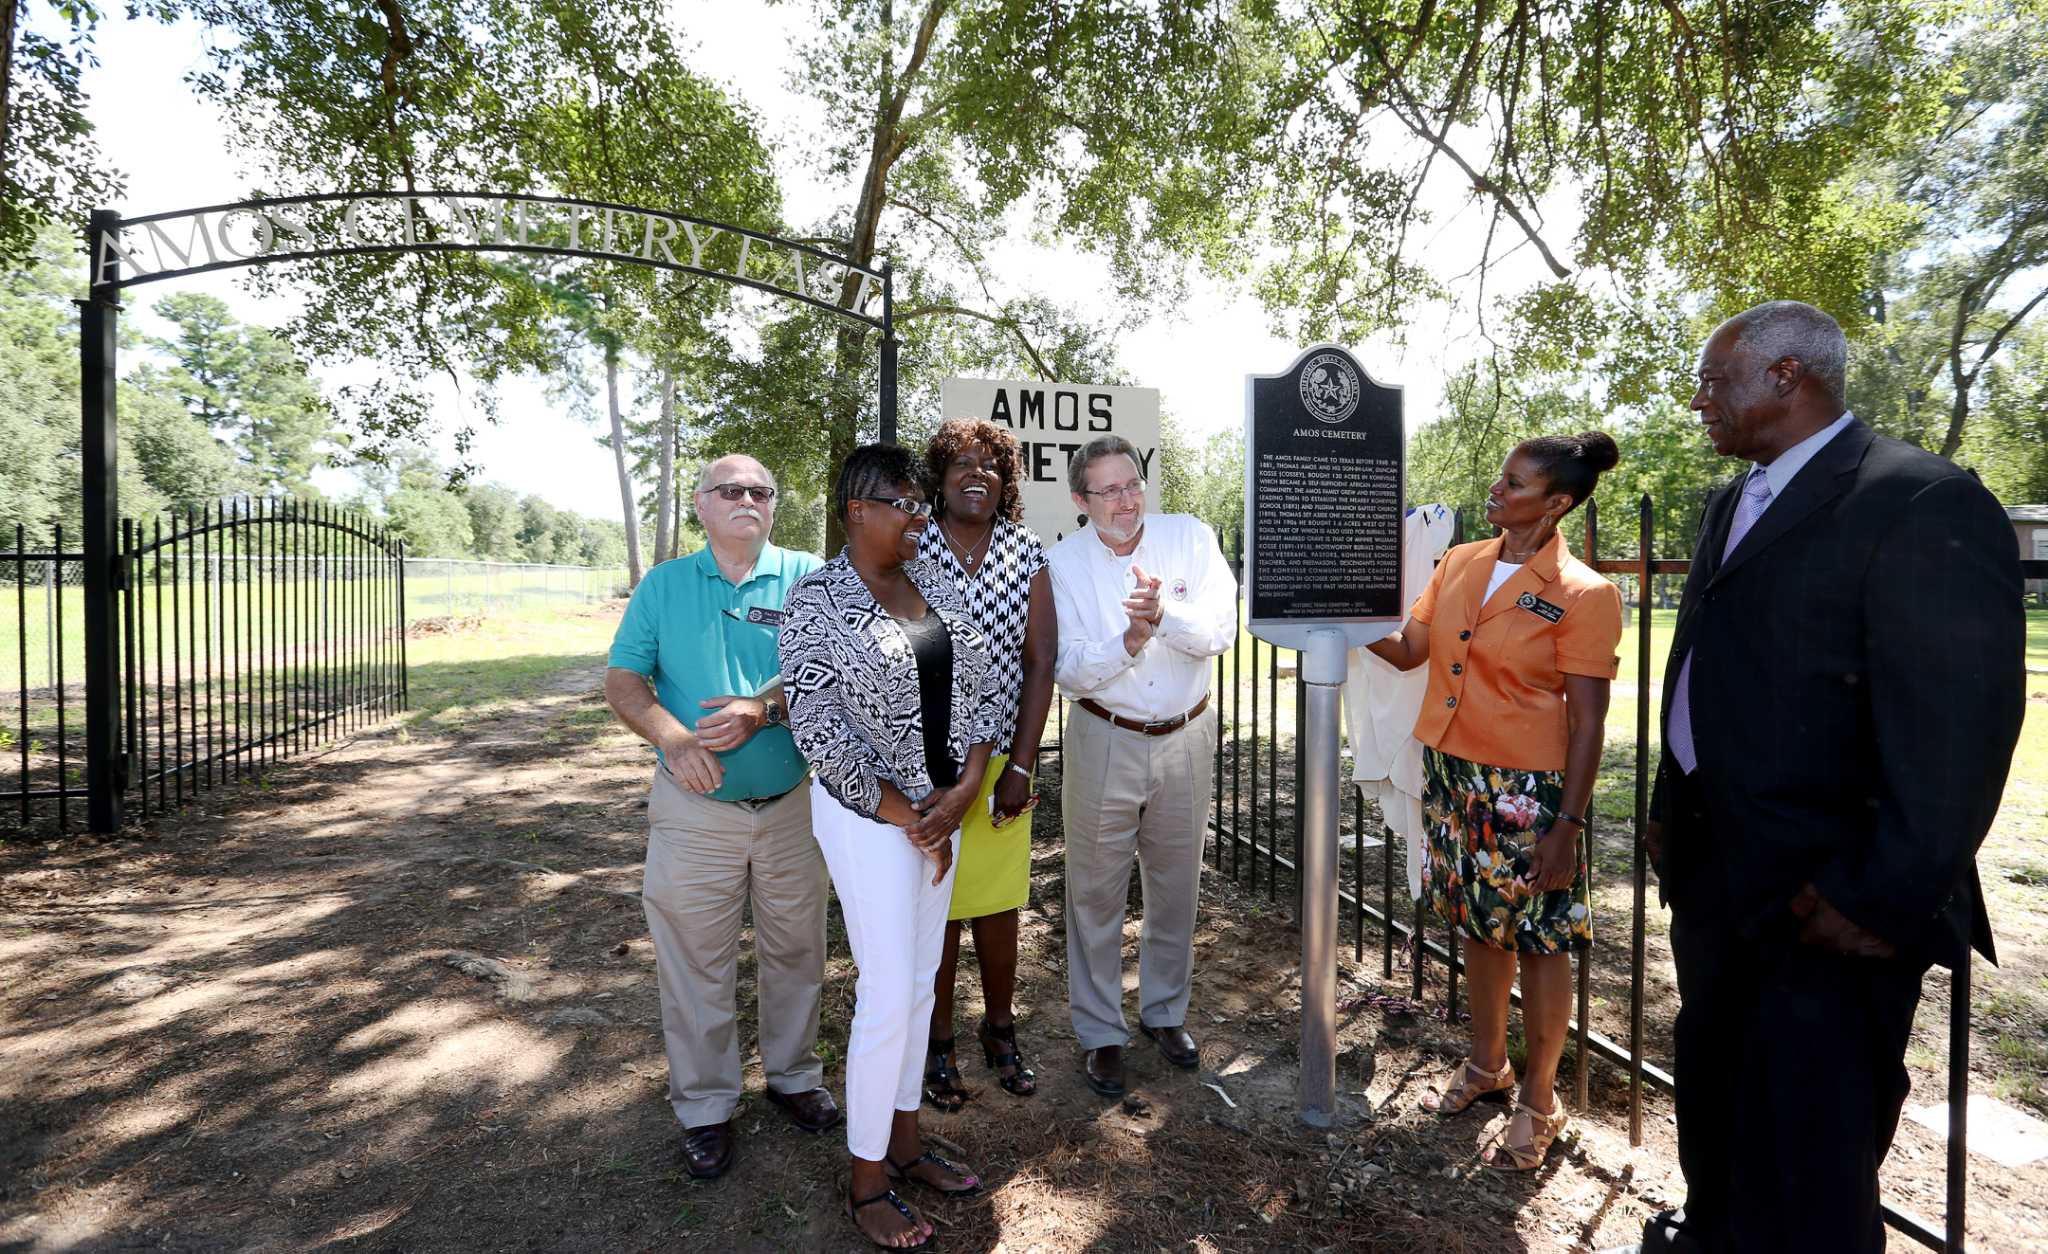 Kohrville community plans fundraiser for Amos Cemetery - Chron.com